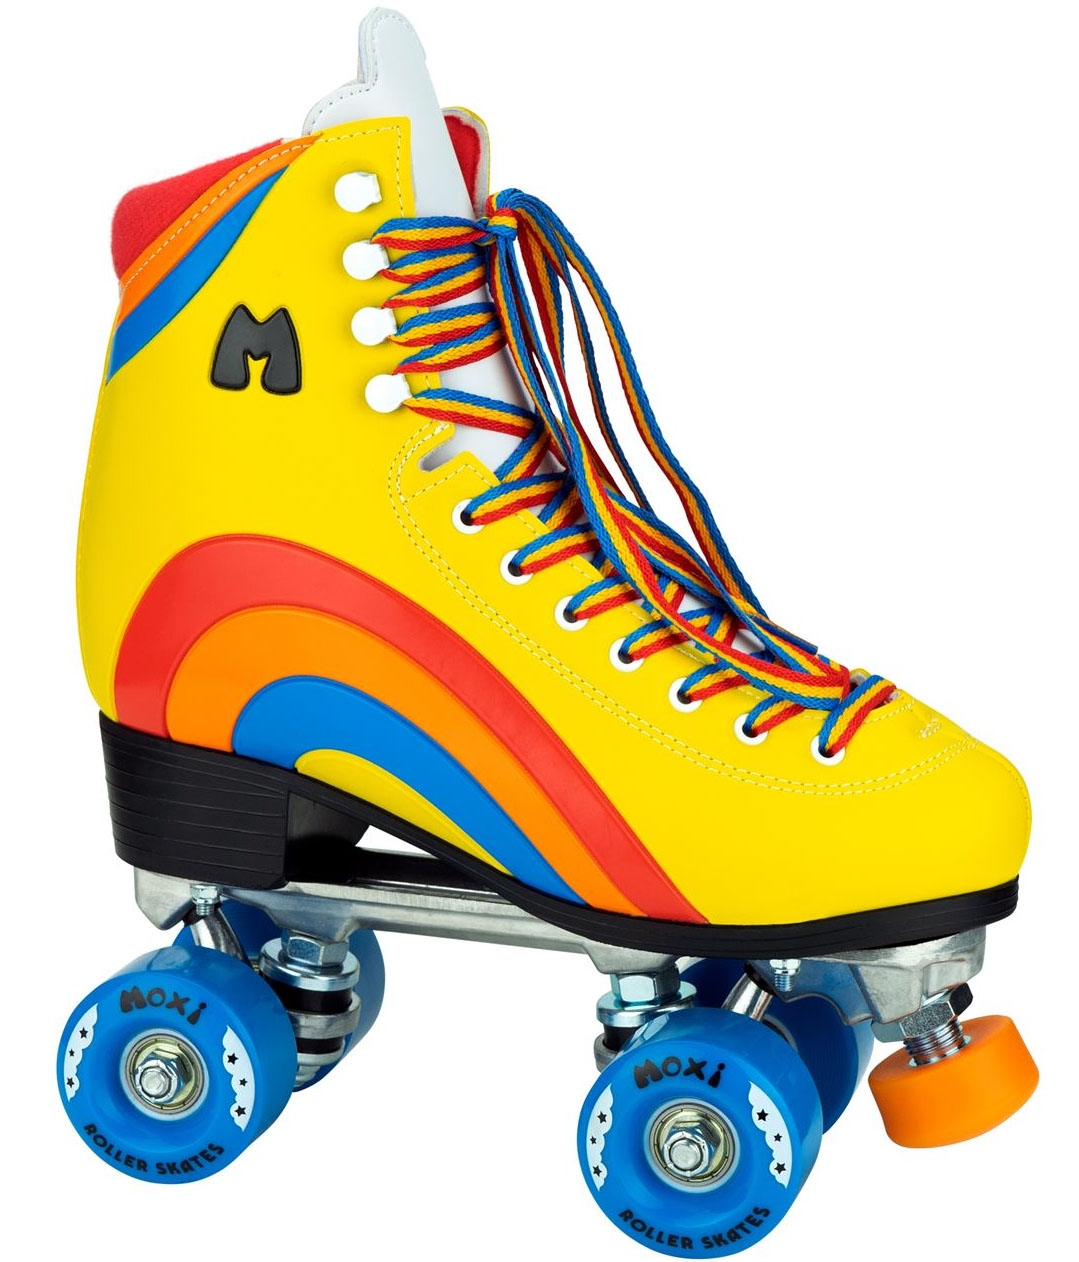 Moxi Rainbow Rider Quad Roller Skates Sunset Yellow – Ripped Knees